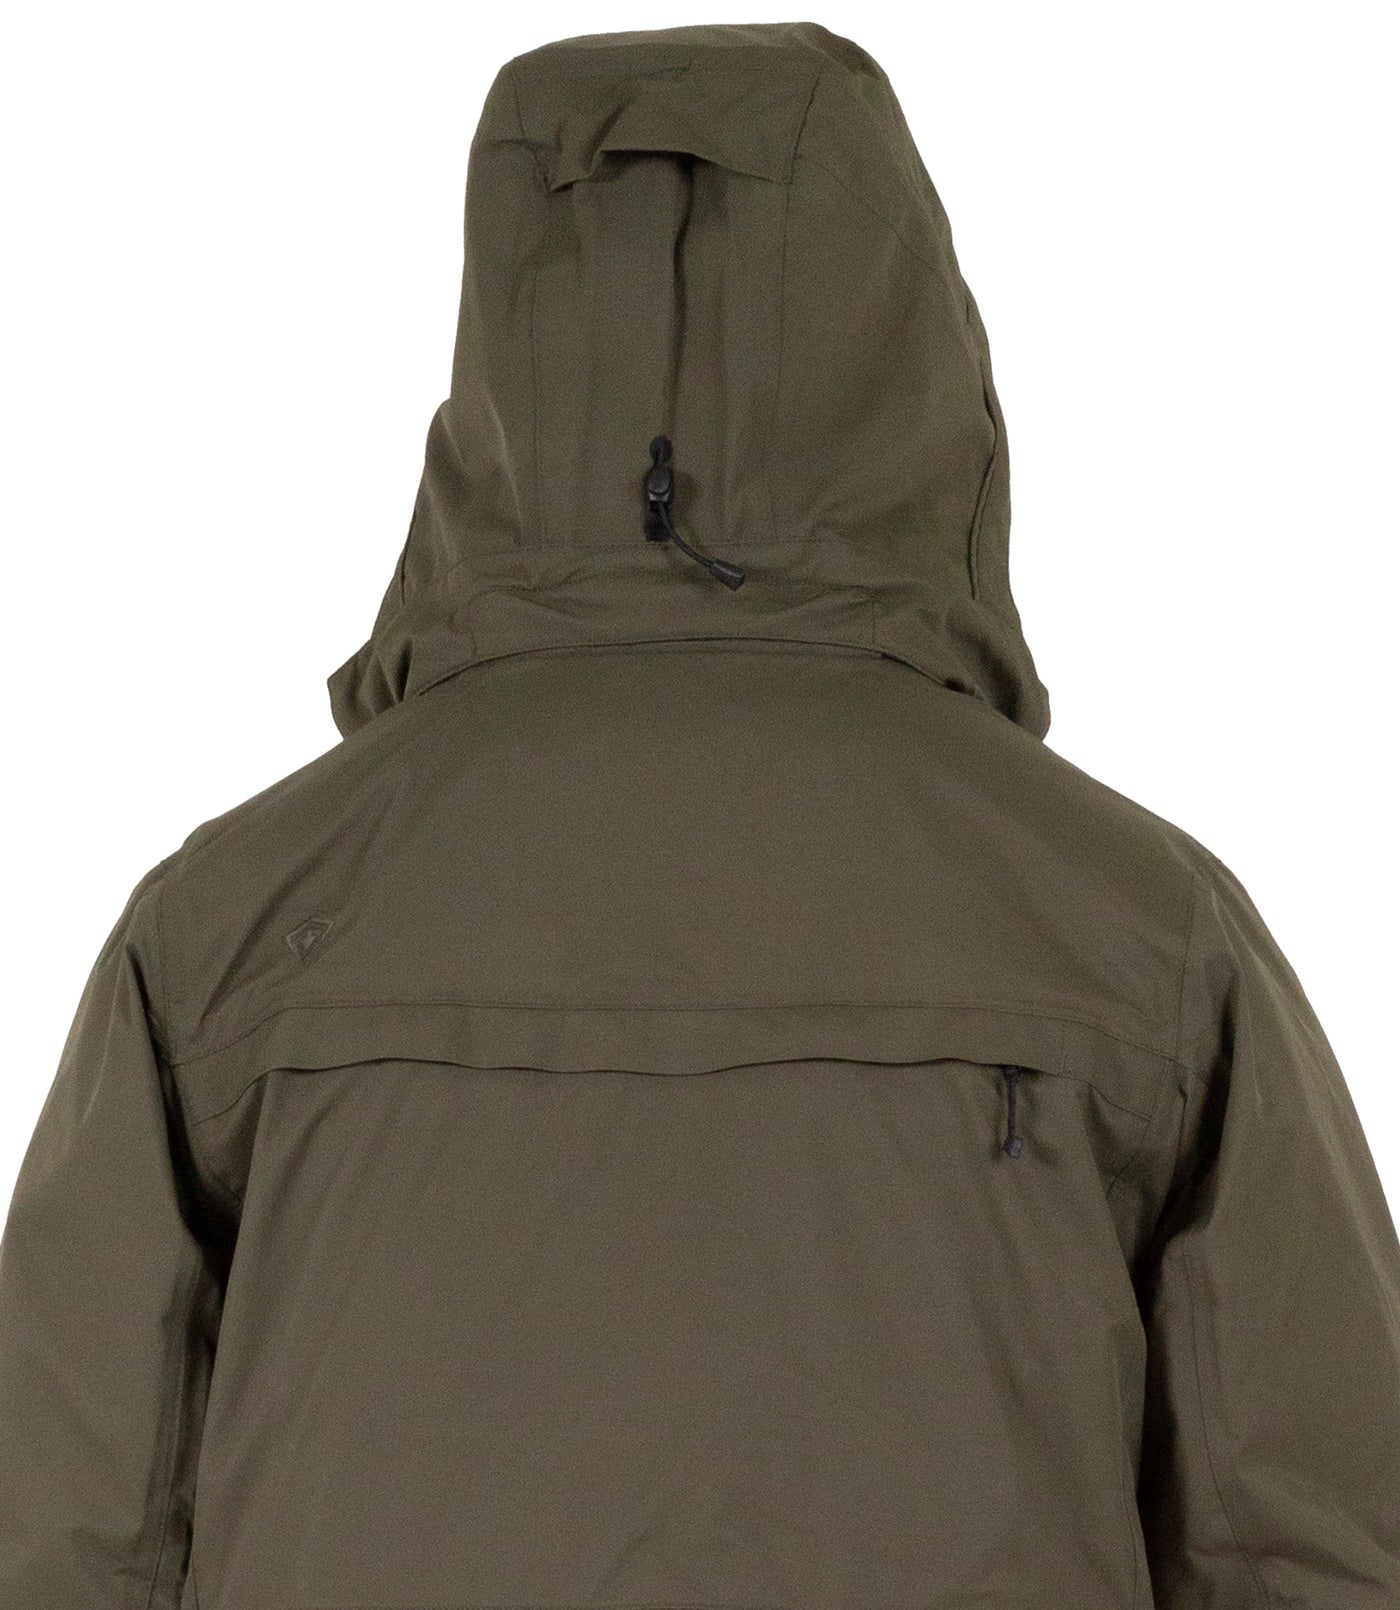 Back Hood of Men’s Tactix System Jacket in OD Green